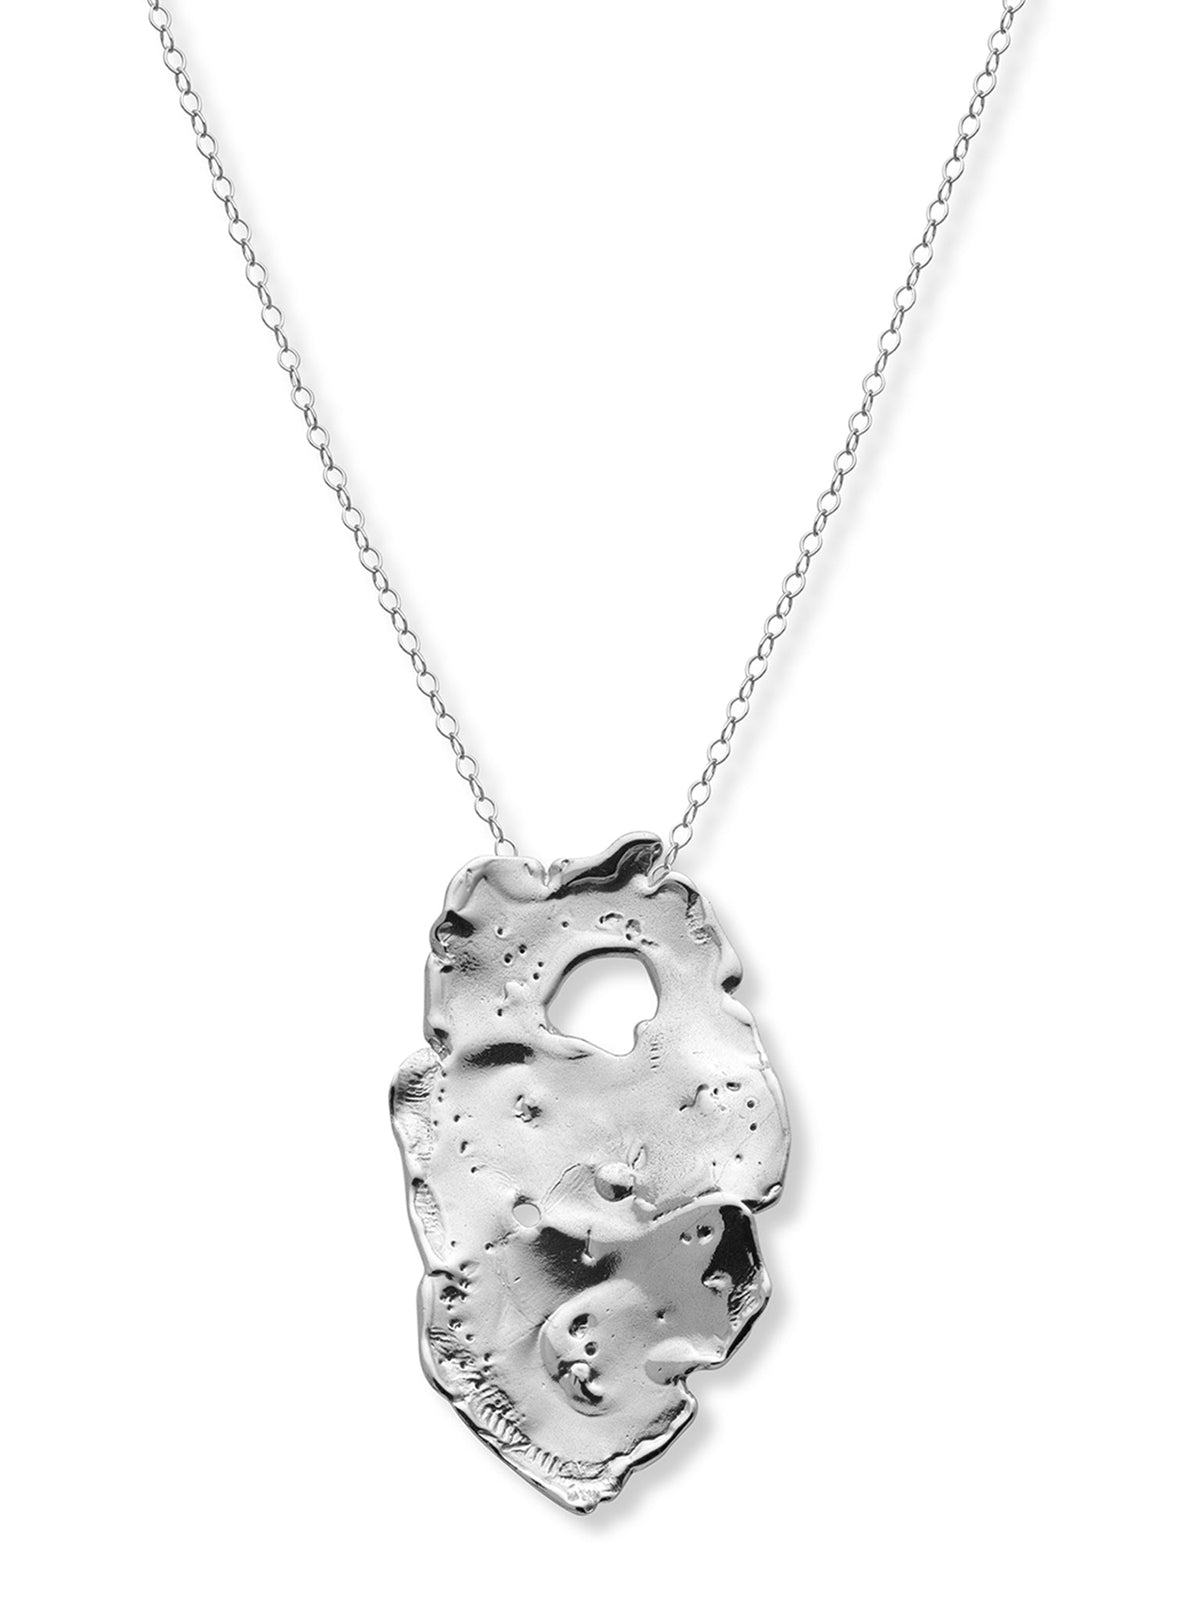 Talisman Full Moon Necklace - Silver